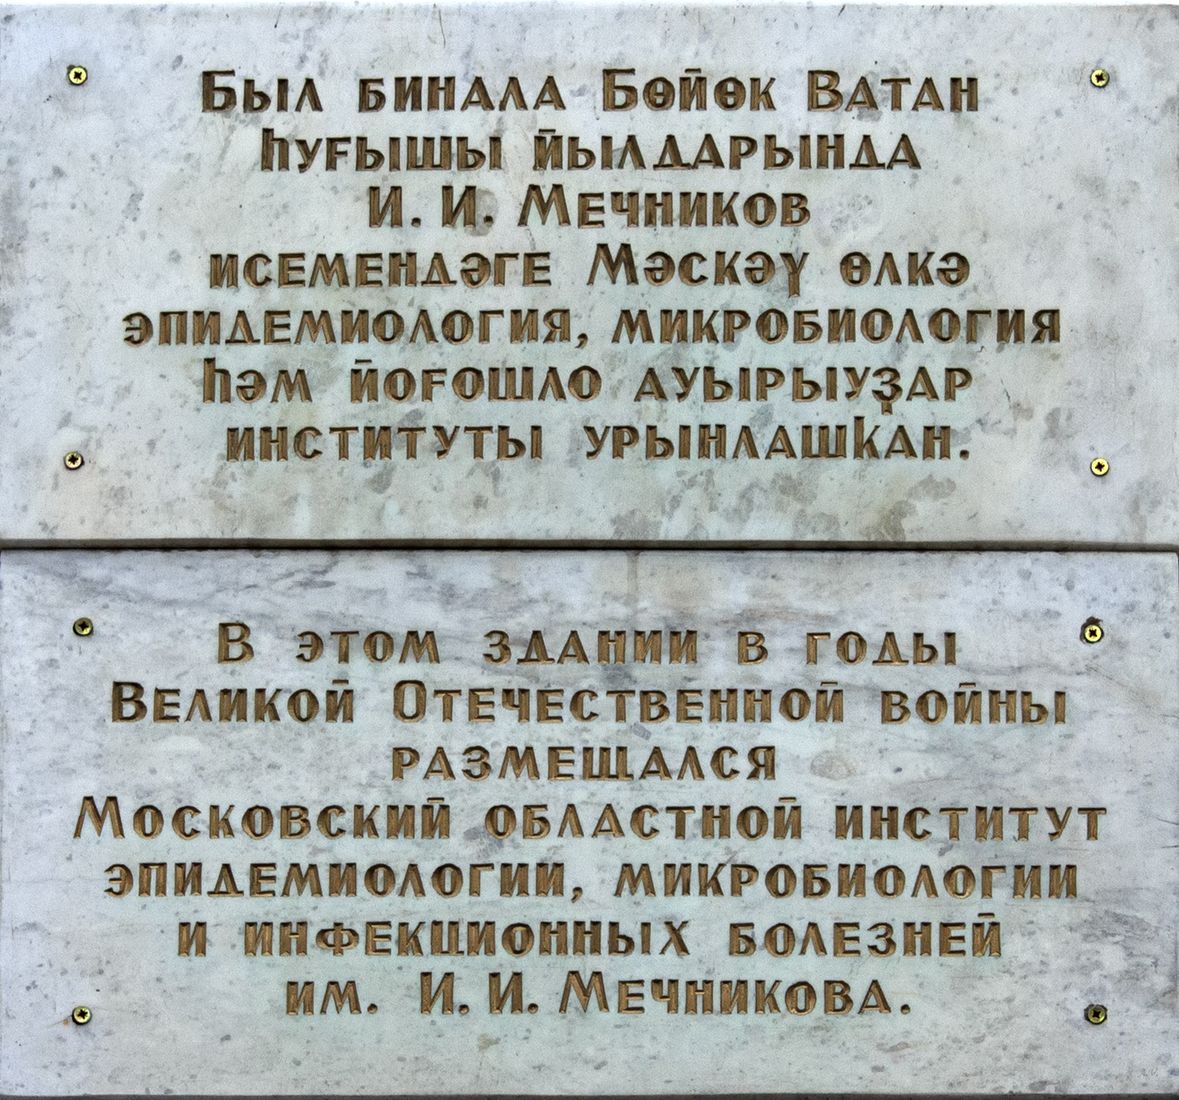 Ufa, Улица Октябрьской Революции, 3А. Ufa — Memorial plaques